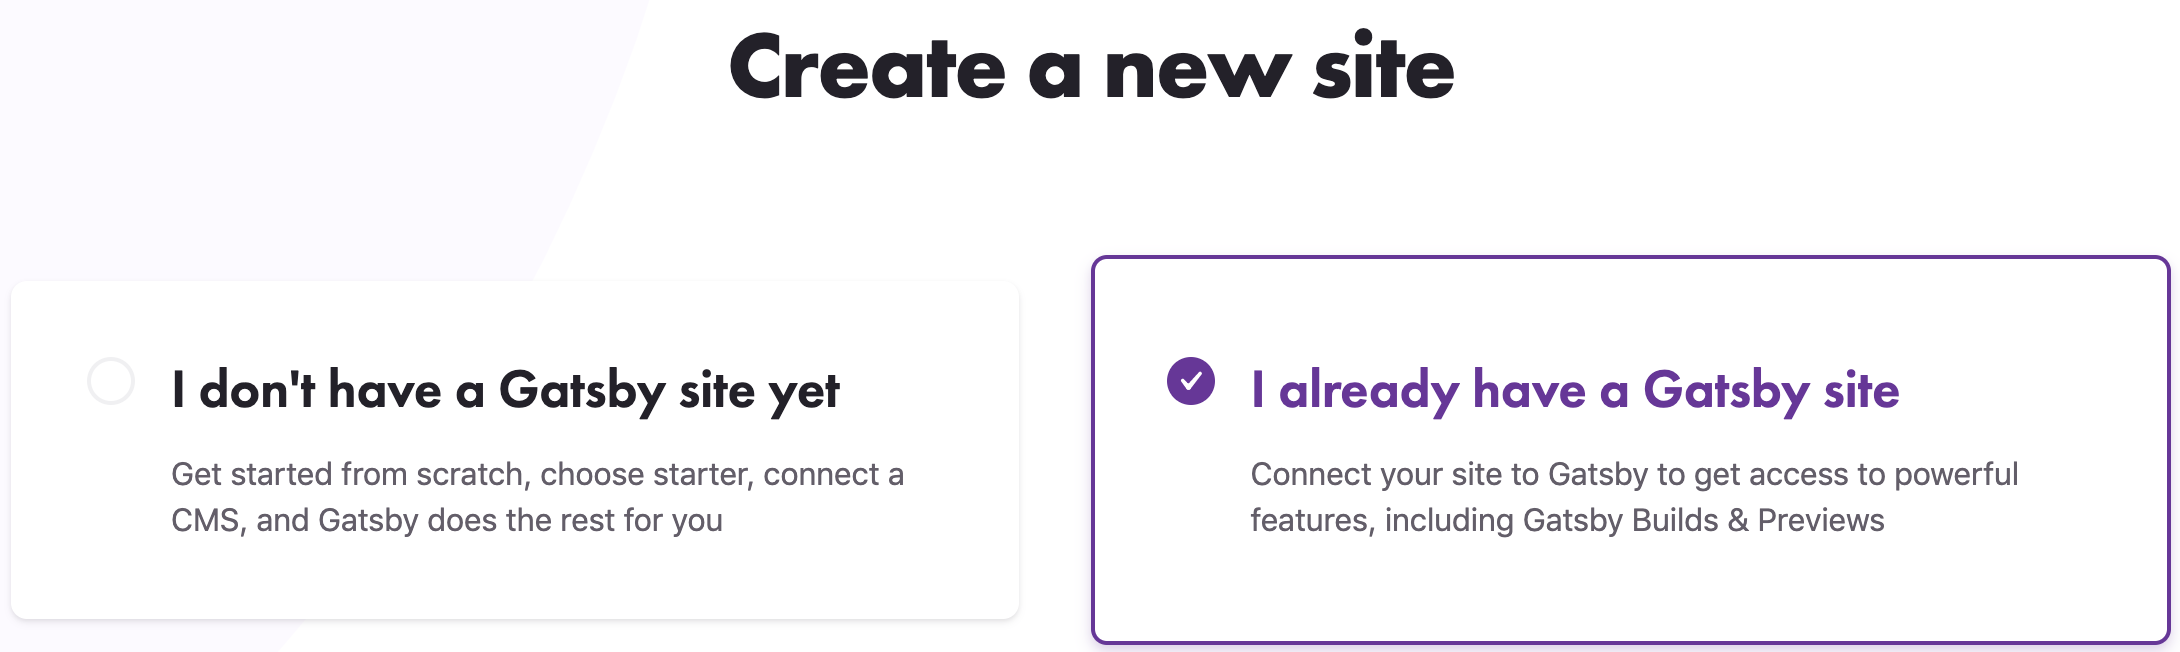 create a new site